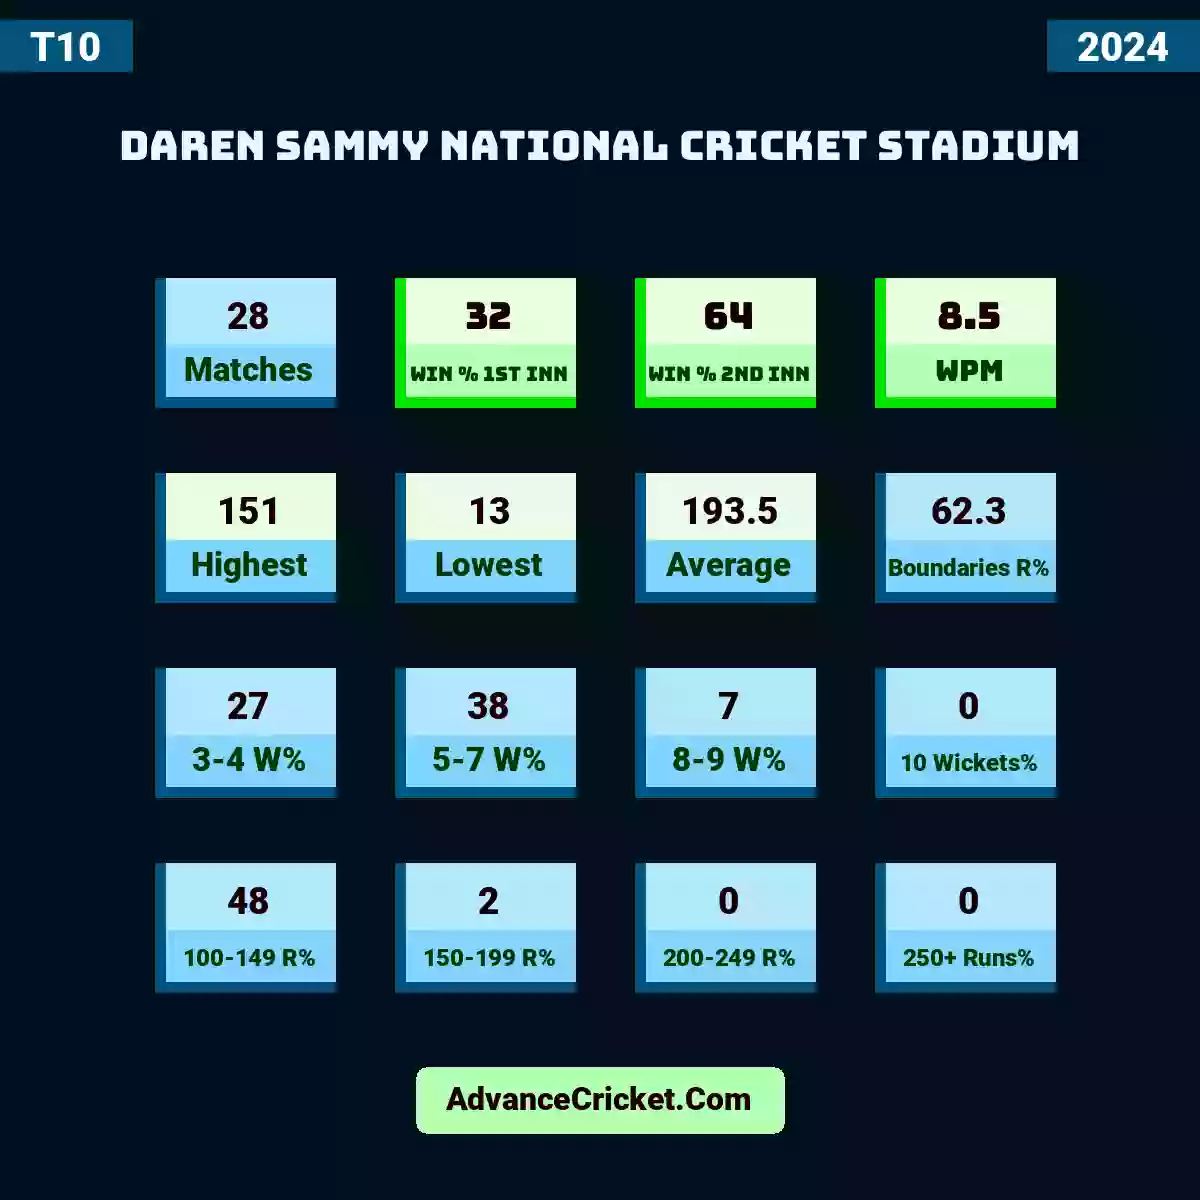 Image showing Daren Sammy National Cricket Stadium T10 2024 with Matches: 28, Win % 1st Inn: 32, Win % 2nd Inn: 64, WPM: 8.5, Highest: 151, Lowest: 13, Average: 193.5, Boundaries R%: 62.3, 3-4 W%: 27, 5-7 W%: 38, 8-9 W%: 7, 10 Wickets%: 0, 100-149 R%: 48, 150-199 R%: 2, 200-249 R%: 0, 250+ Runs%: 0.